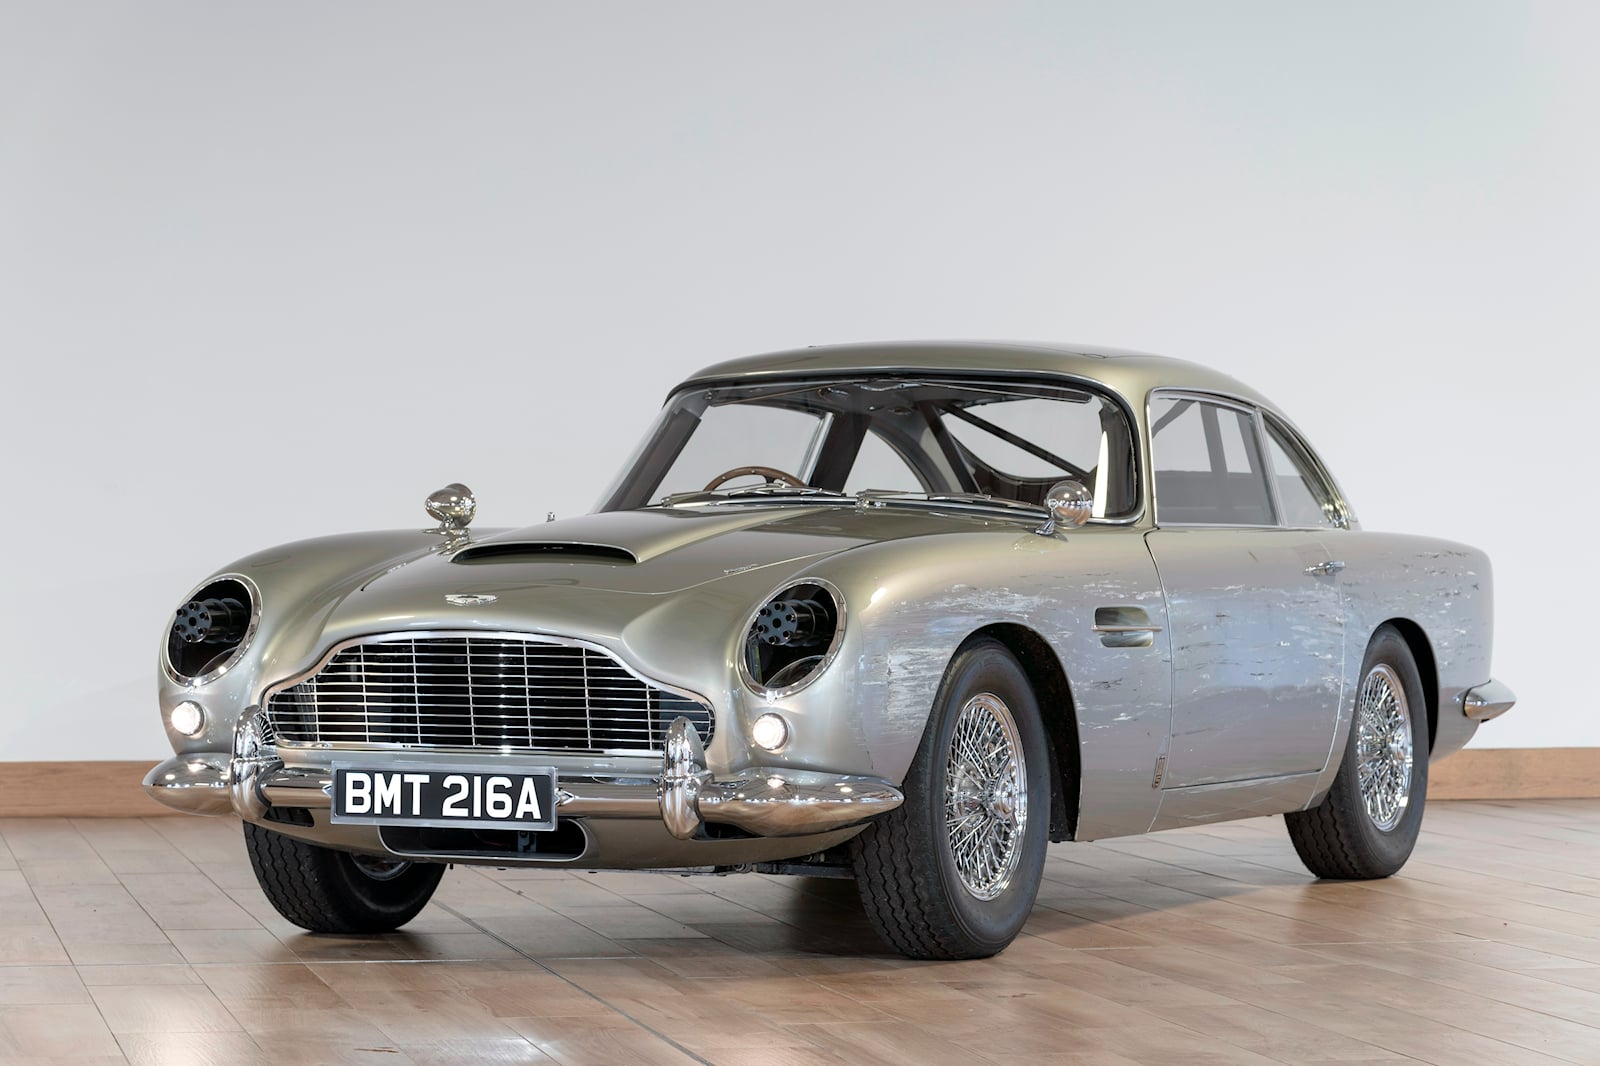 Bonds Aston Martin DB5 Sells For Over $3 Million